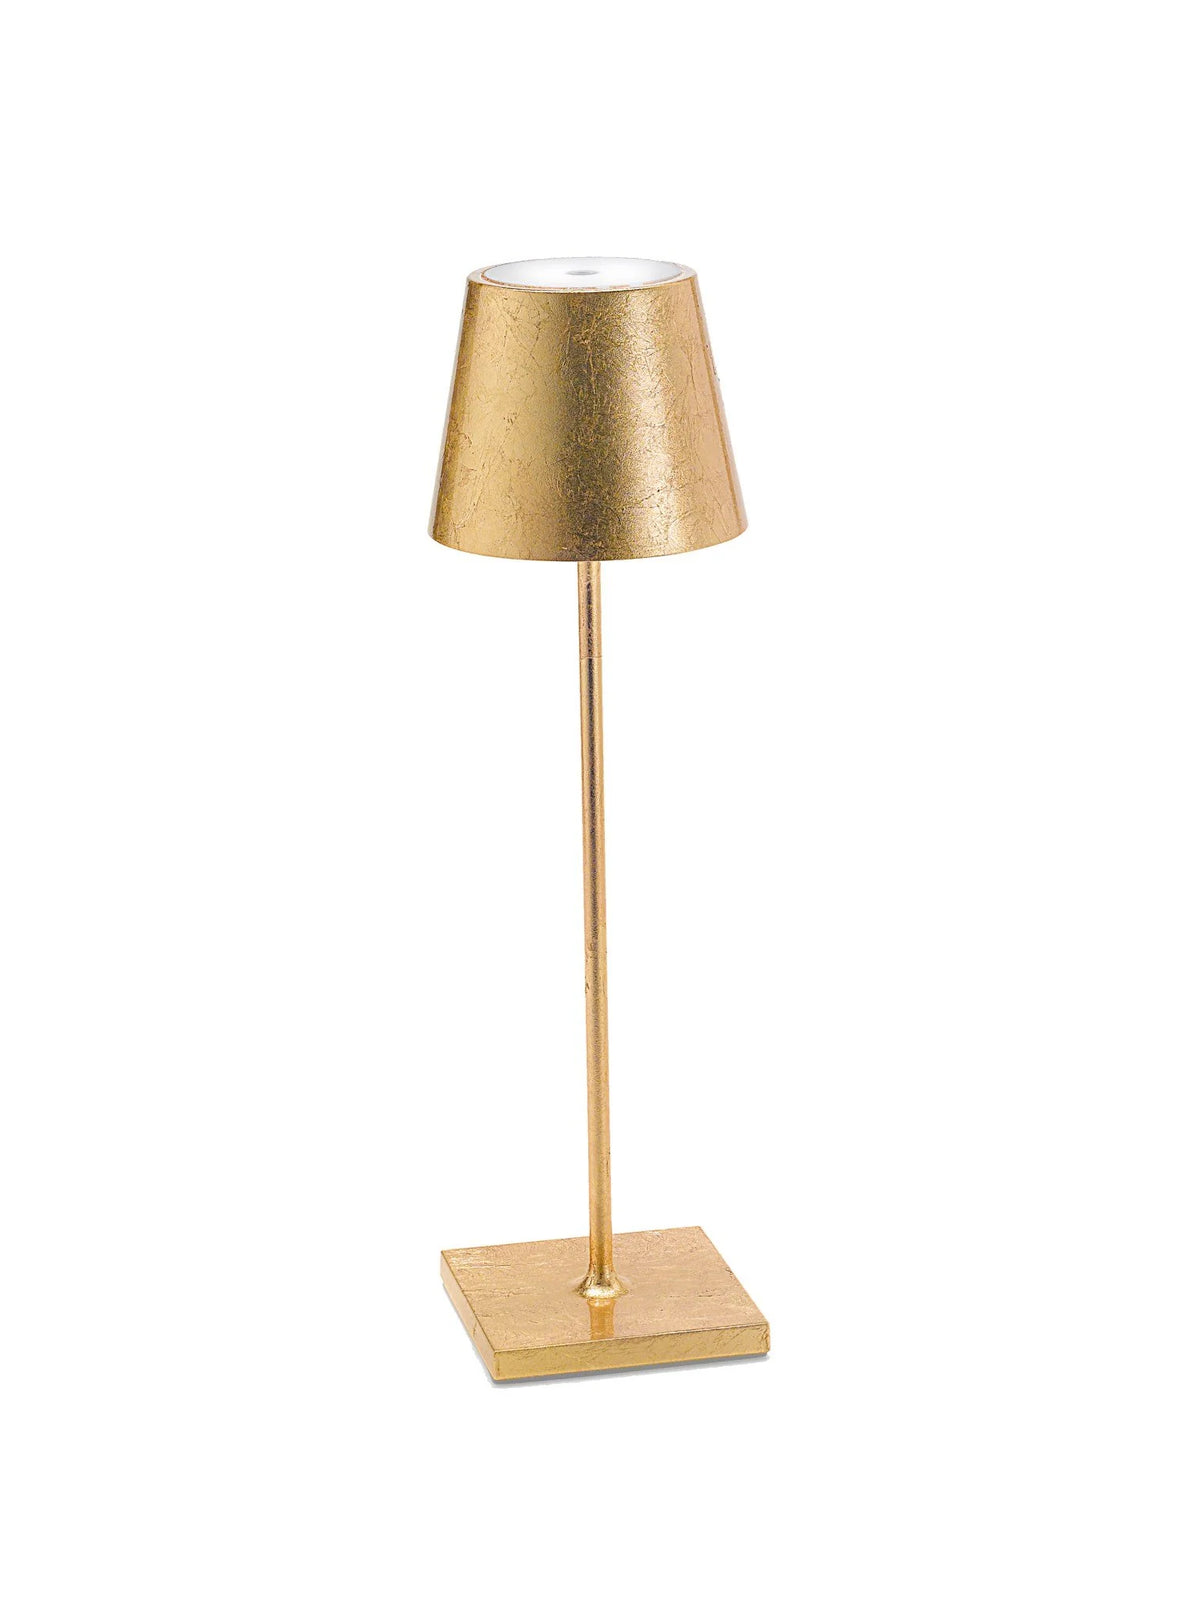 Poldina Pro Lamp in Gold Leaf